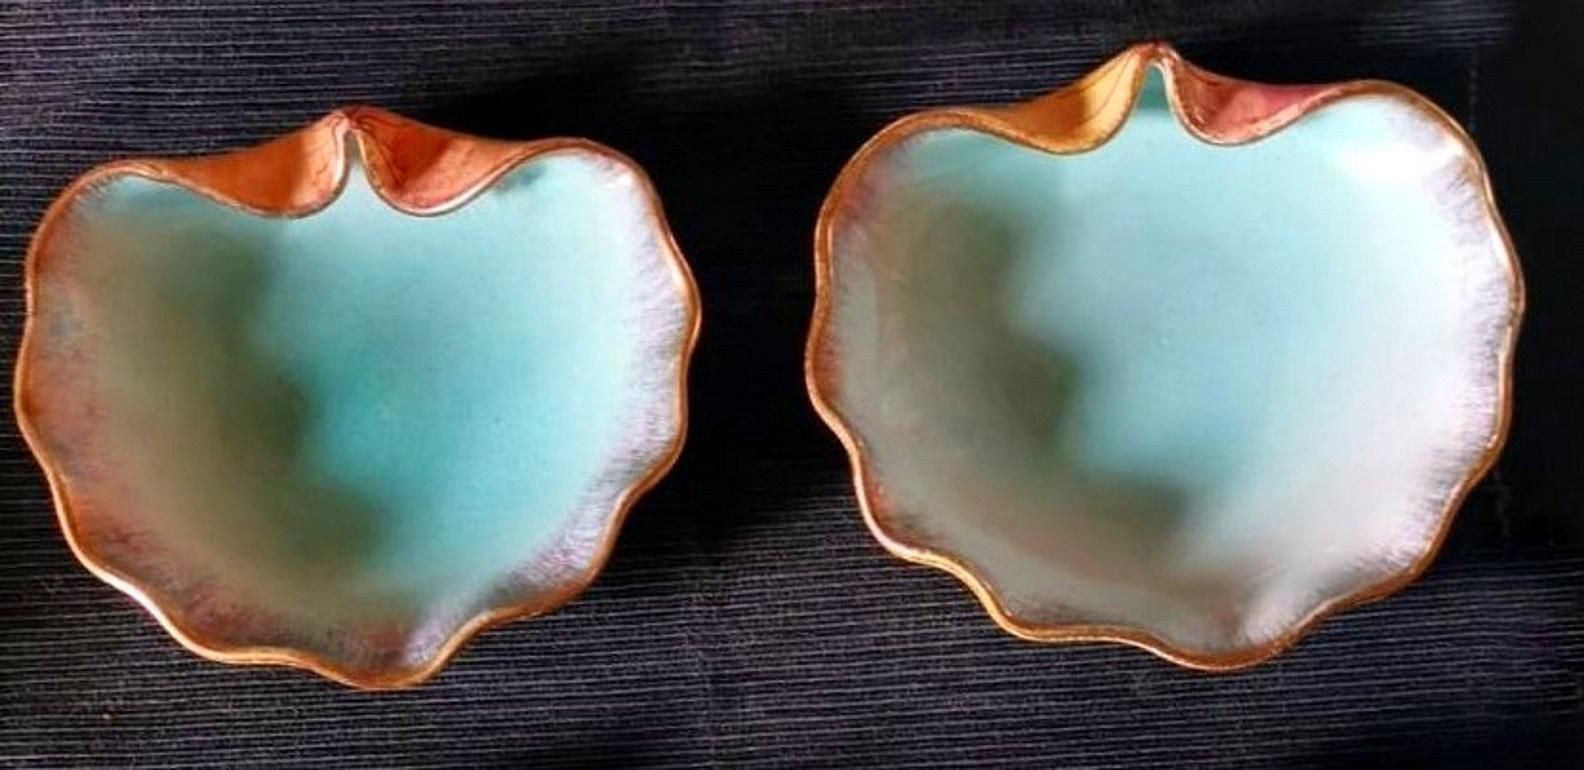 Rometti Ceramiche Umbria 'Italy' Set of 4 Shell-Shaped Ceramic Ashtrays For Sale 5